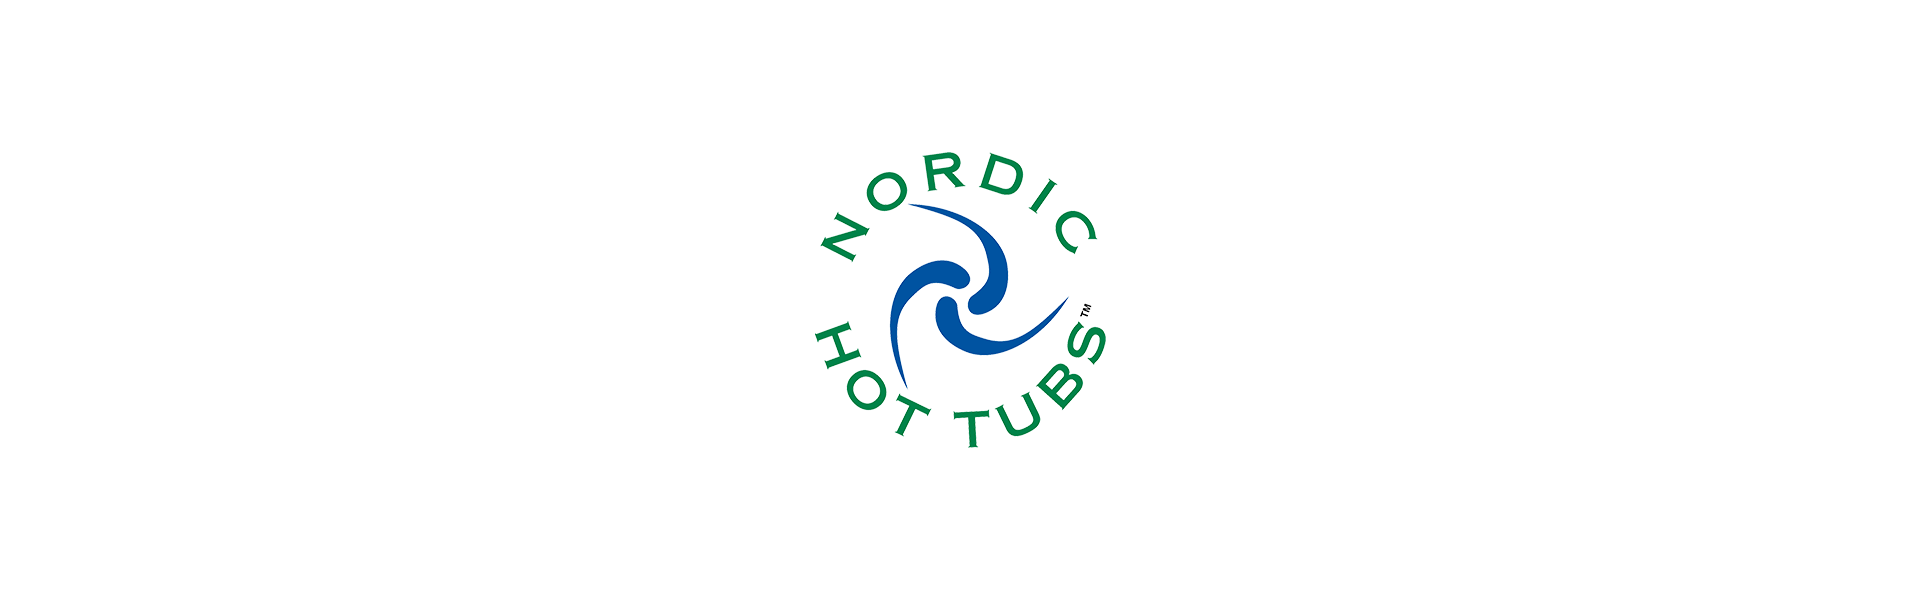 nordic-title-logo